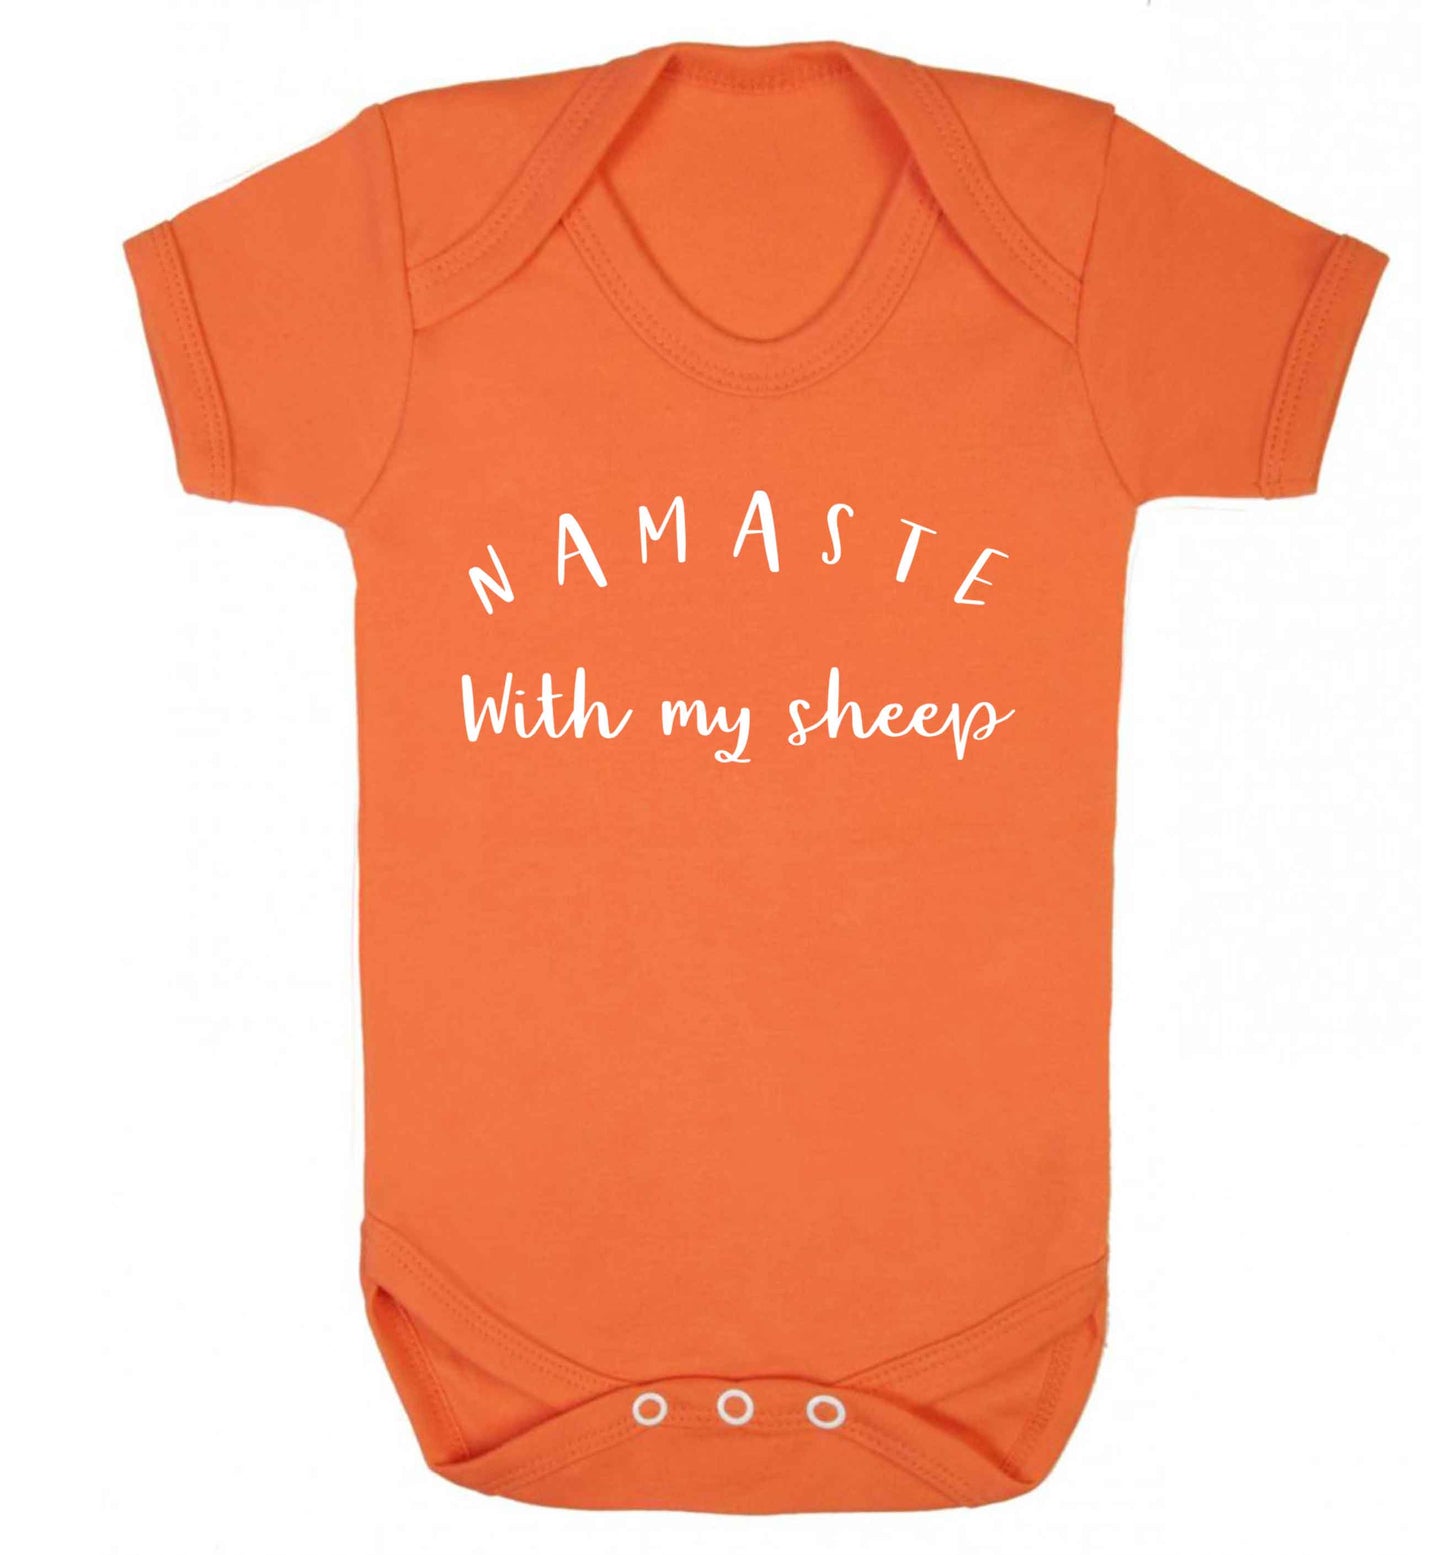 Namaste with my sheep Baby Vest orange 18-24 months